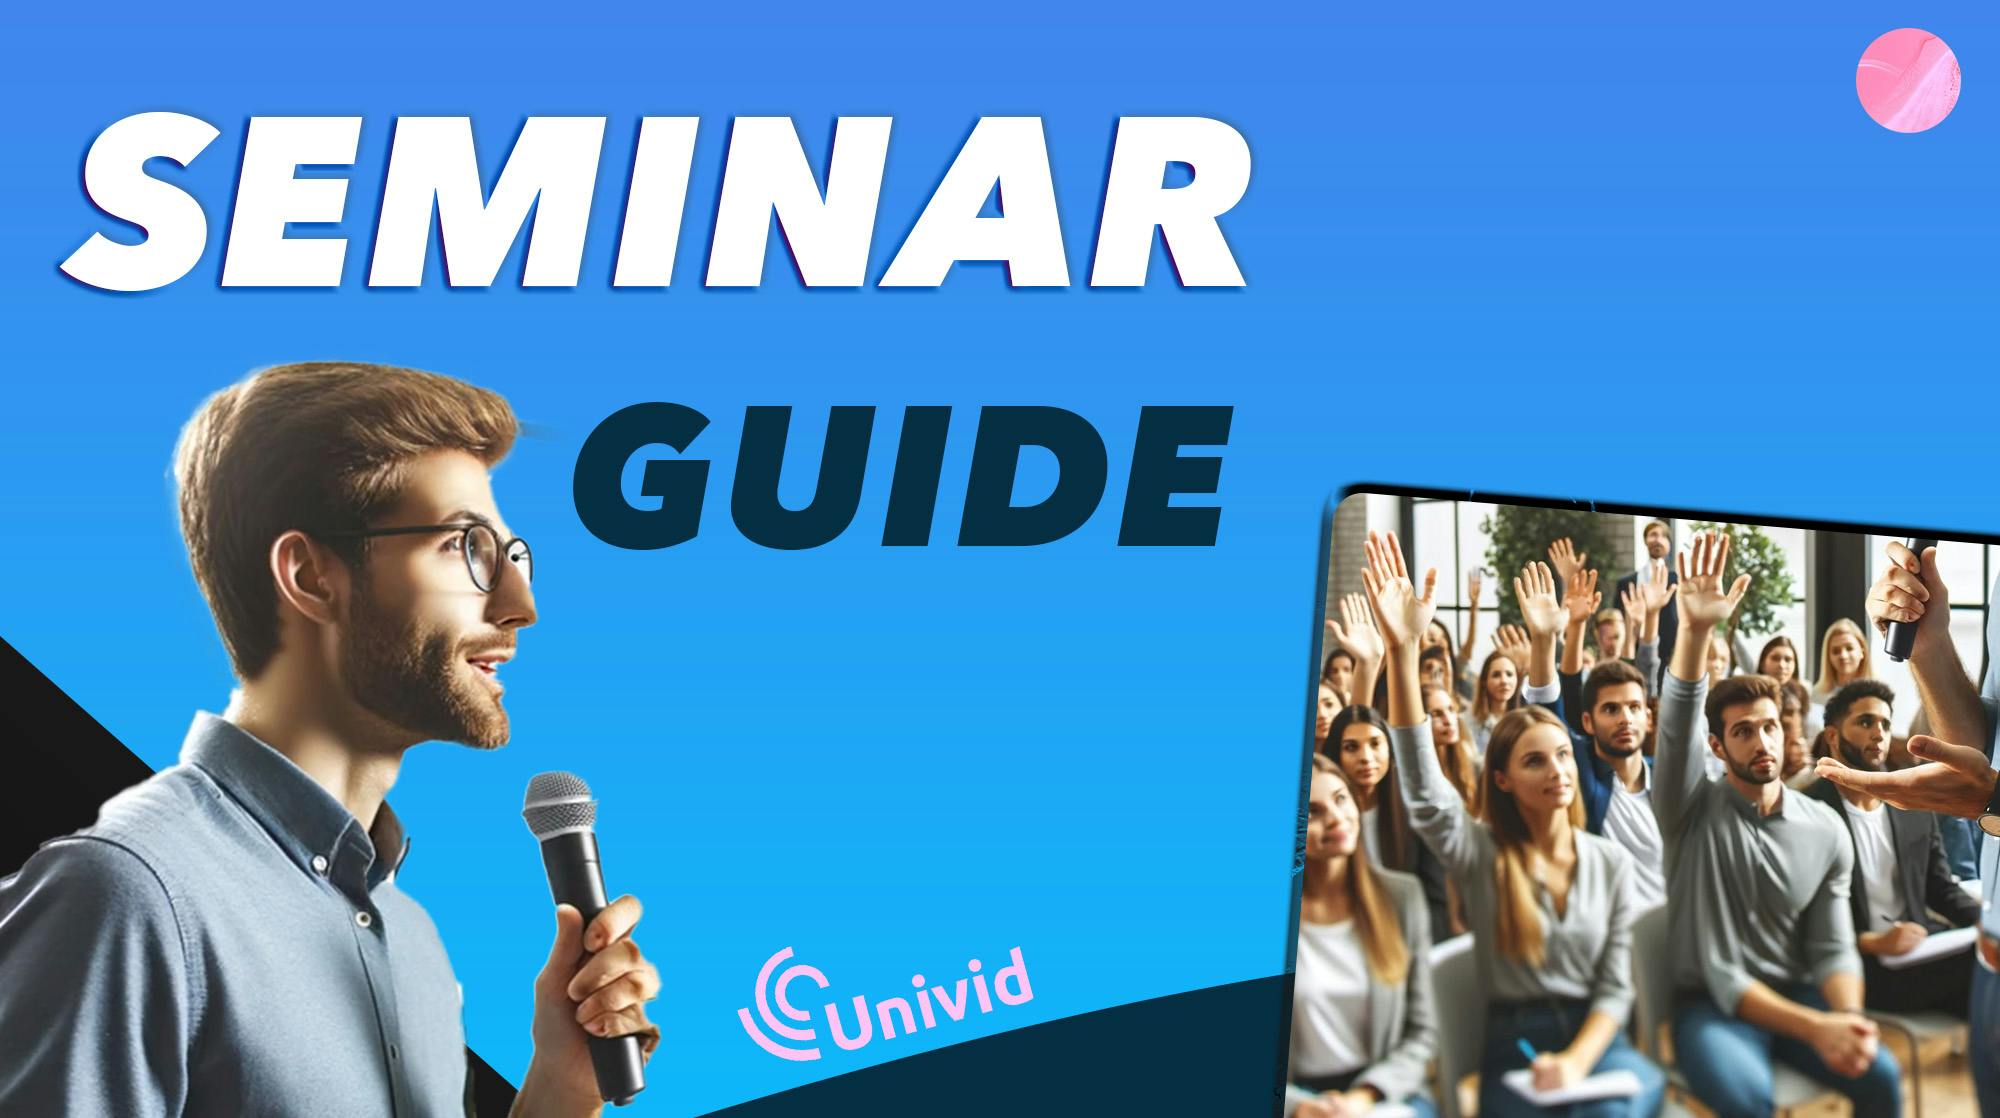 The seminar guide - How to host successful seminars